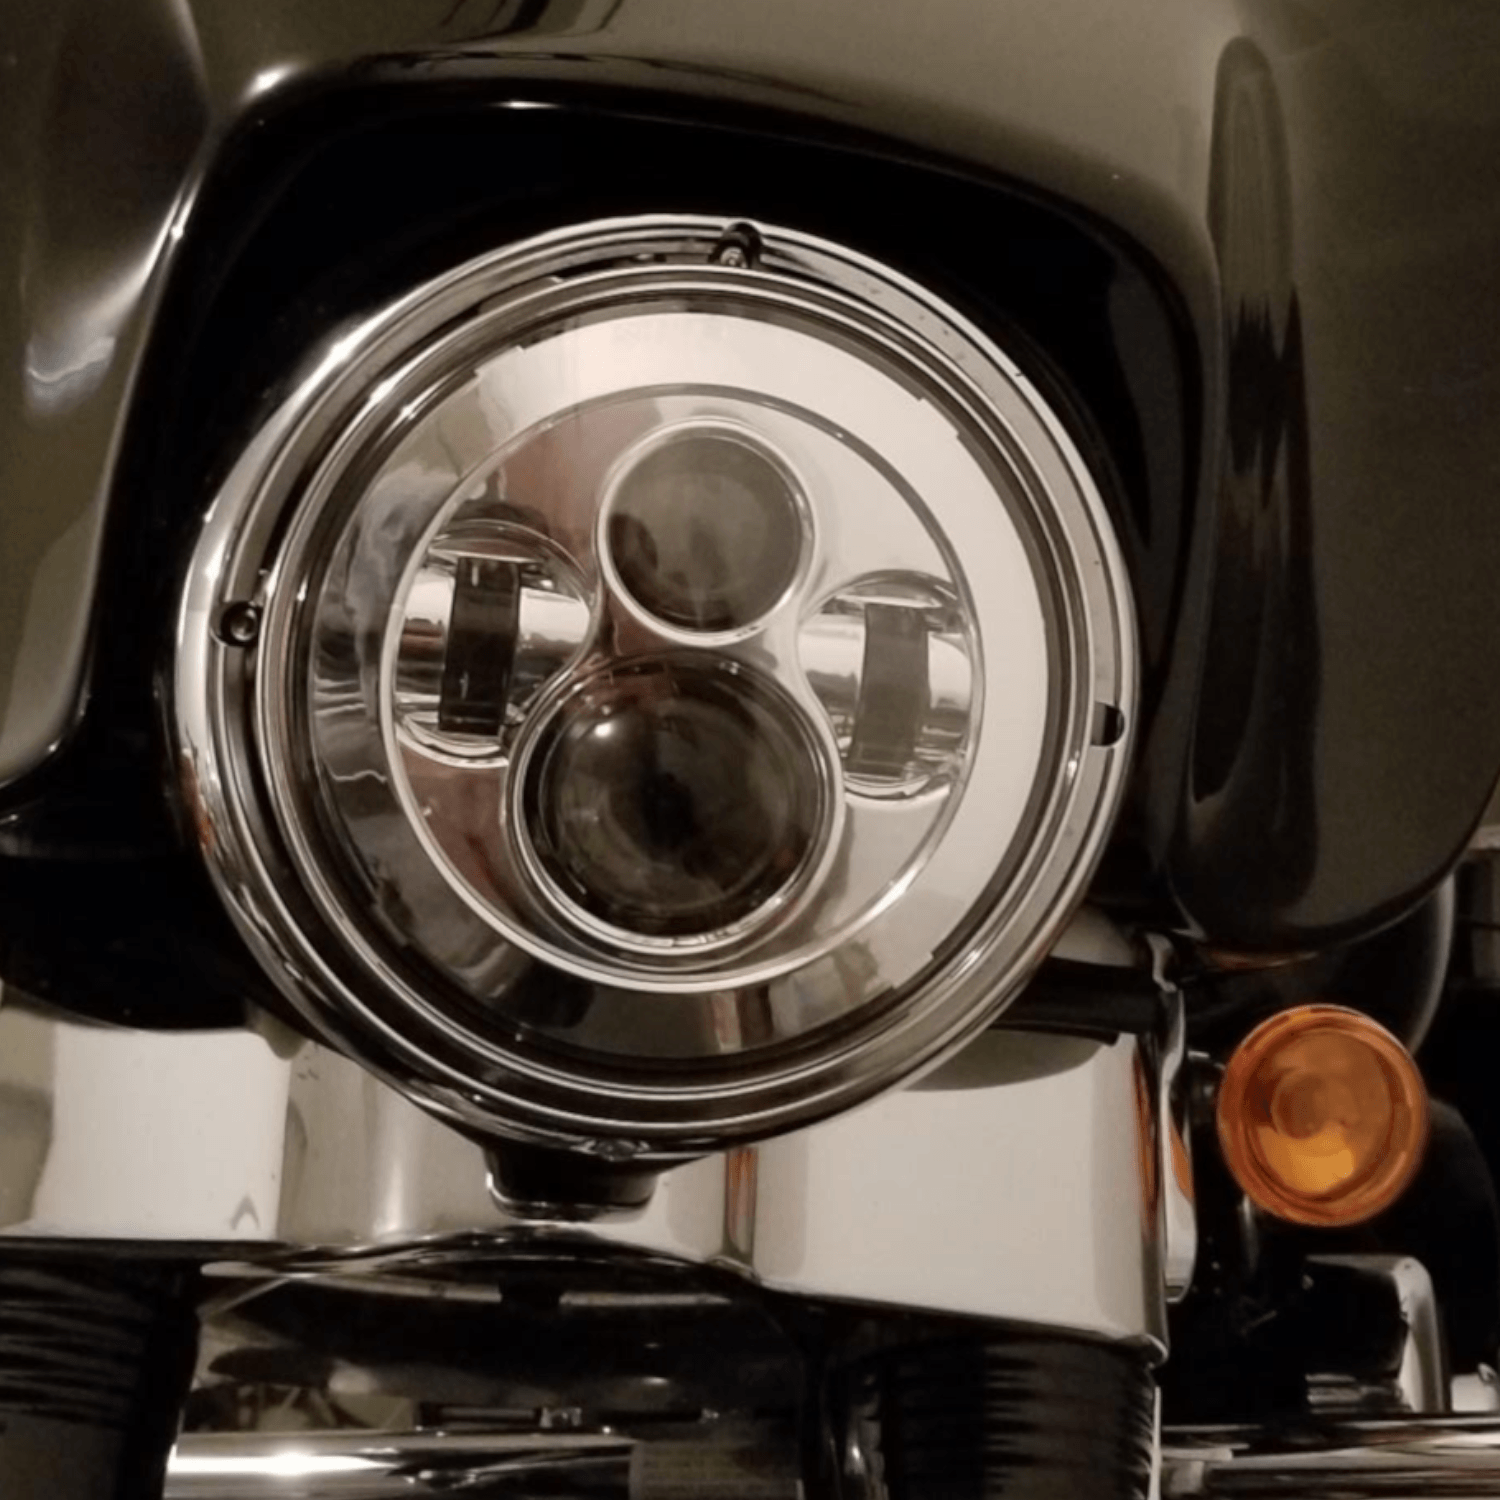 Eagle Lights 7" LED Headlight for Harley Davidson and Indian Motorcycles - Generation I / Chrome Kit